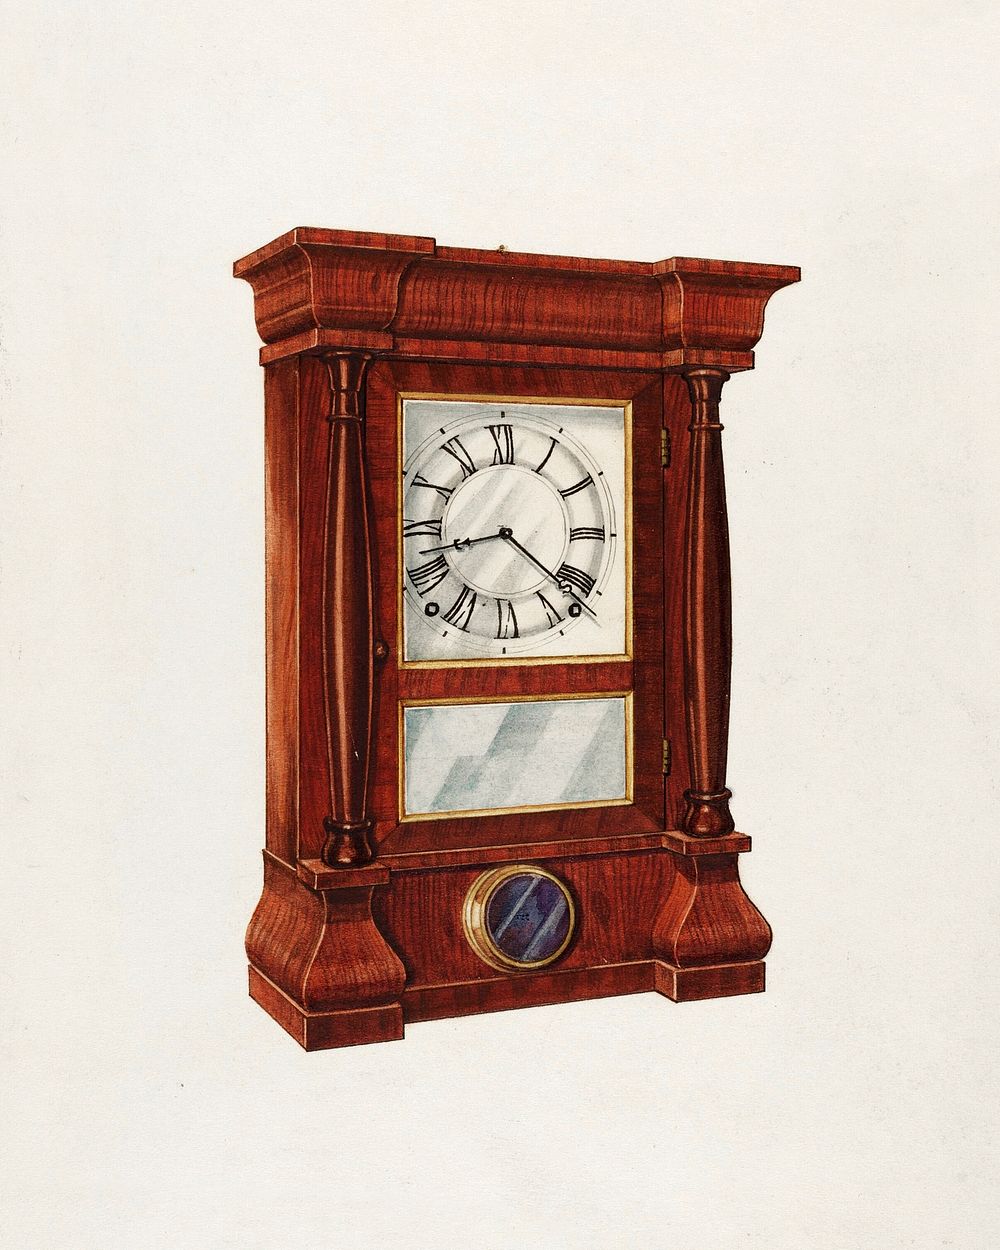 Seth Thomas Clock (c. 1937) by Arthur Mathews. Original from The National Gallery of Art. Digitally enhanced by rawpixel.